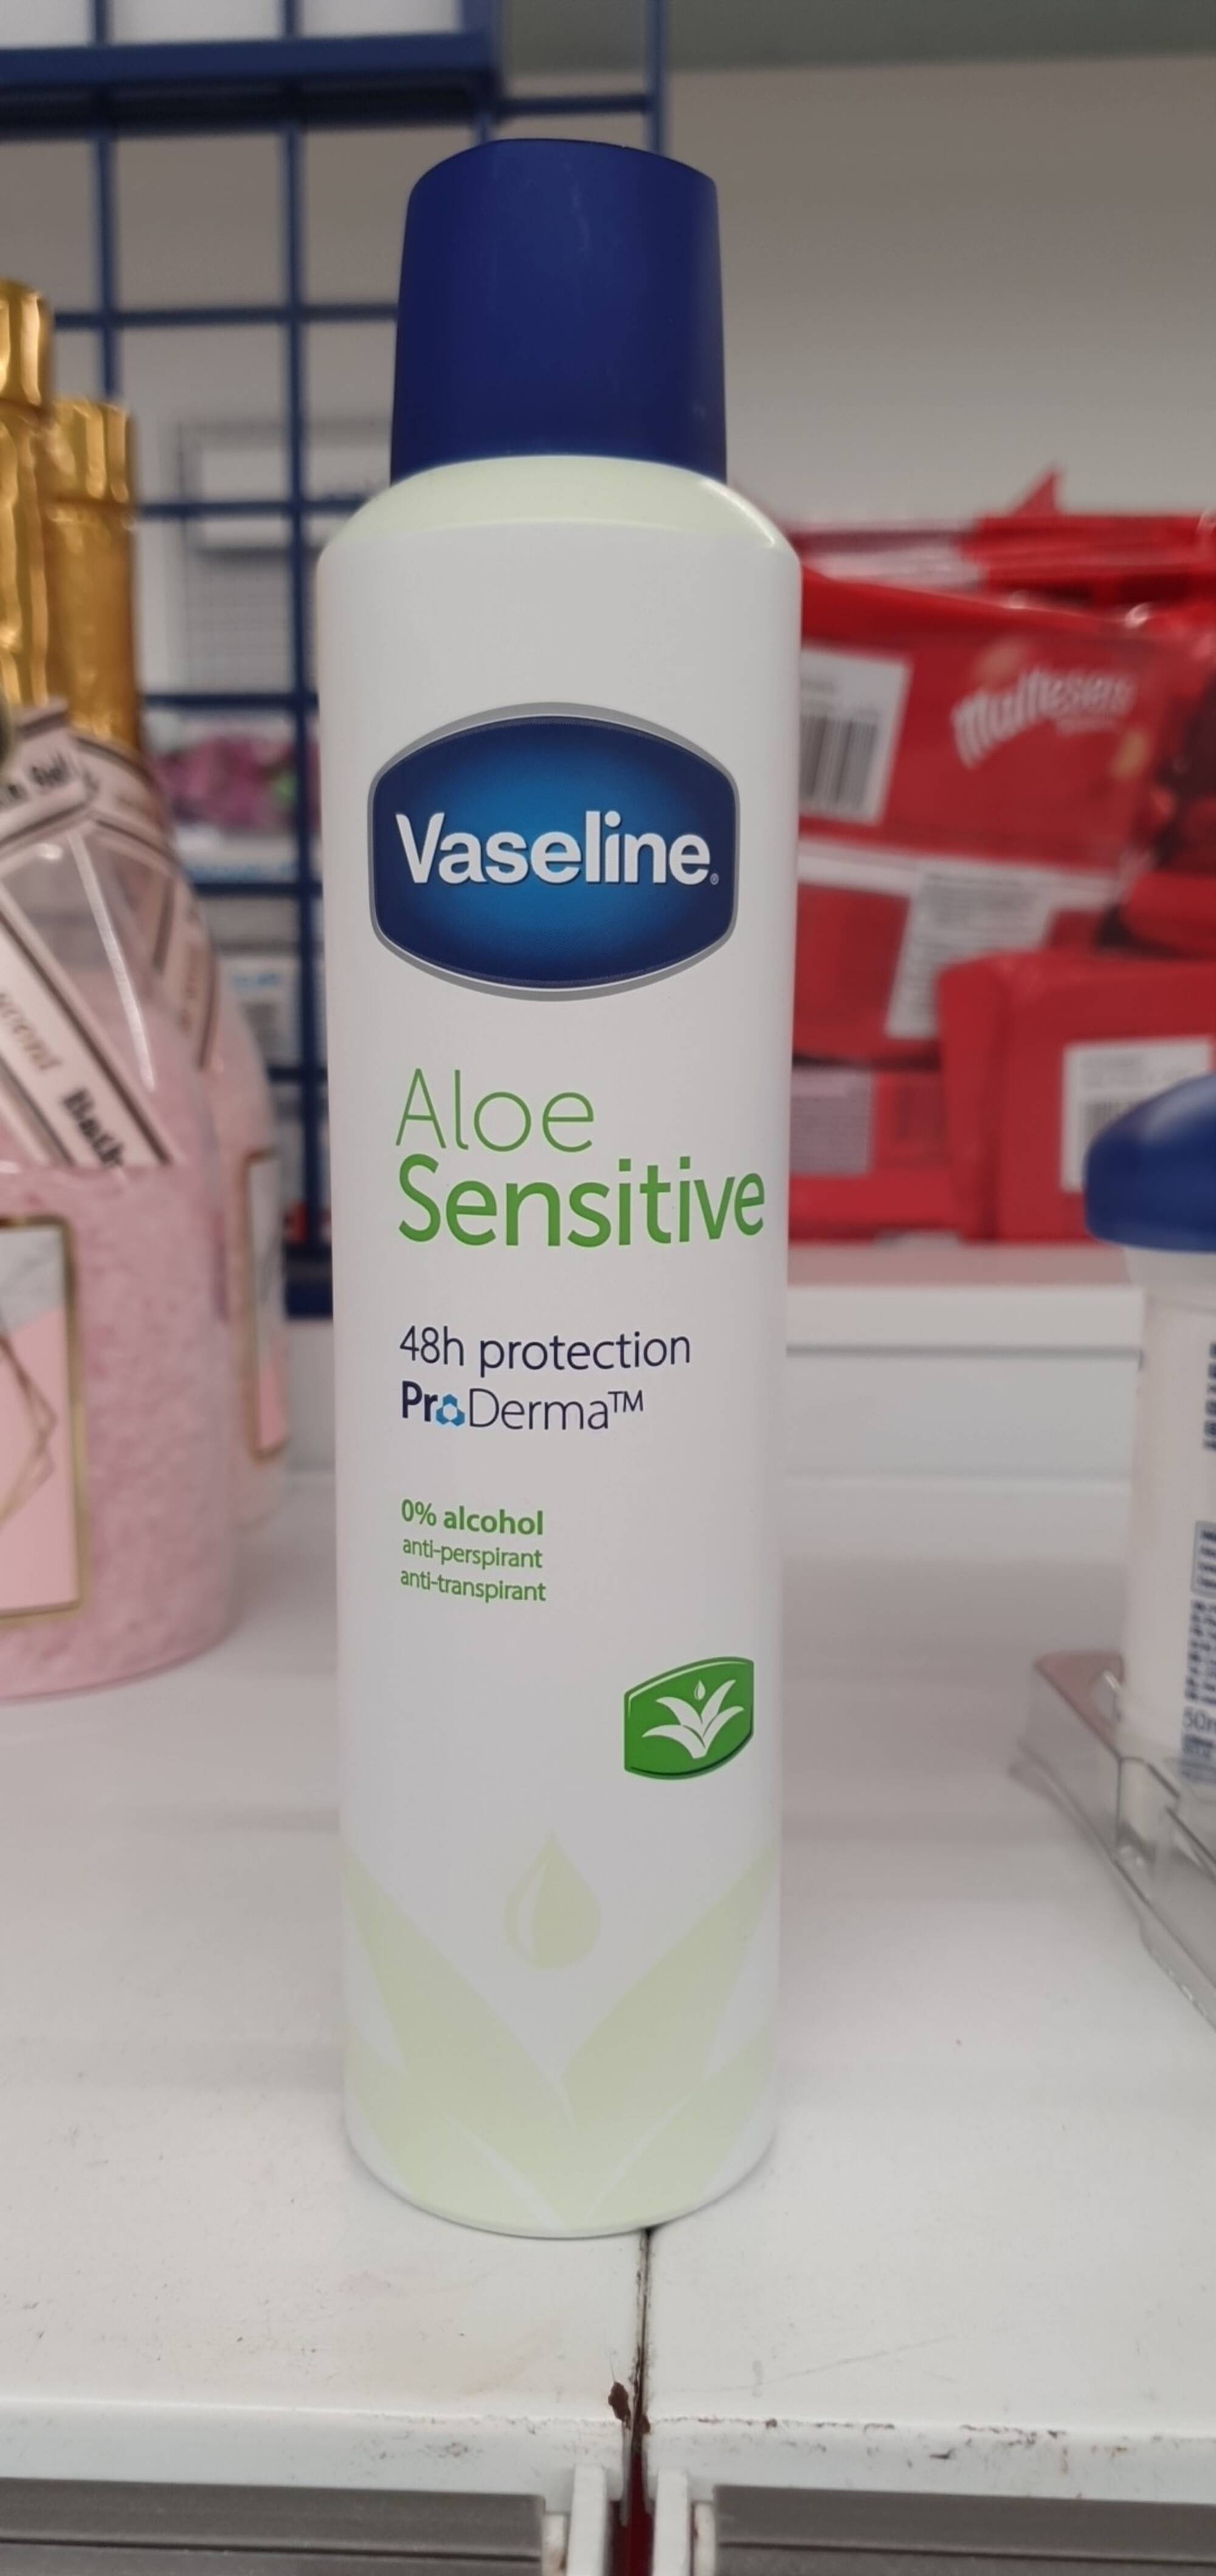 VASELINE - Aloe sensitive - Anti-transpirant 48h protection